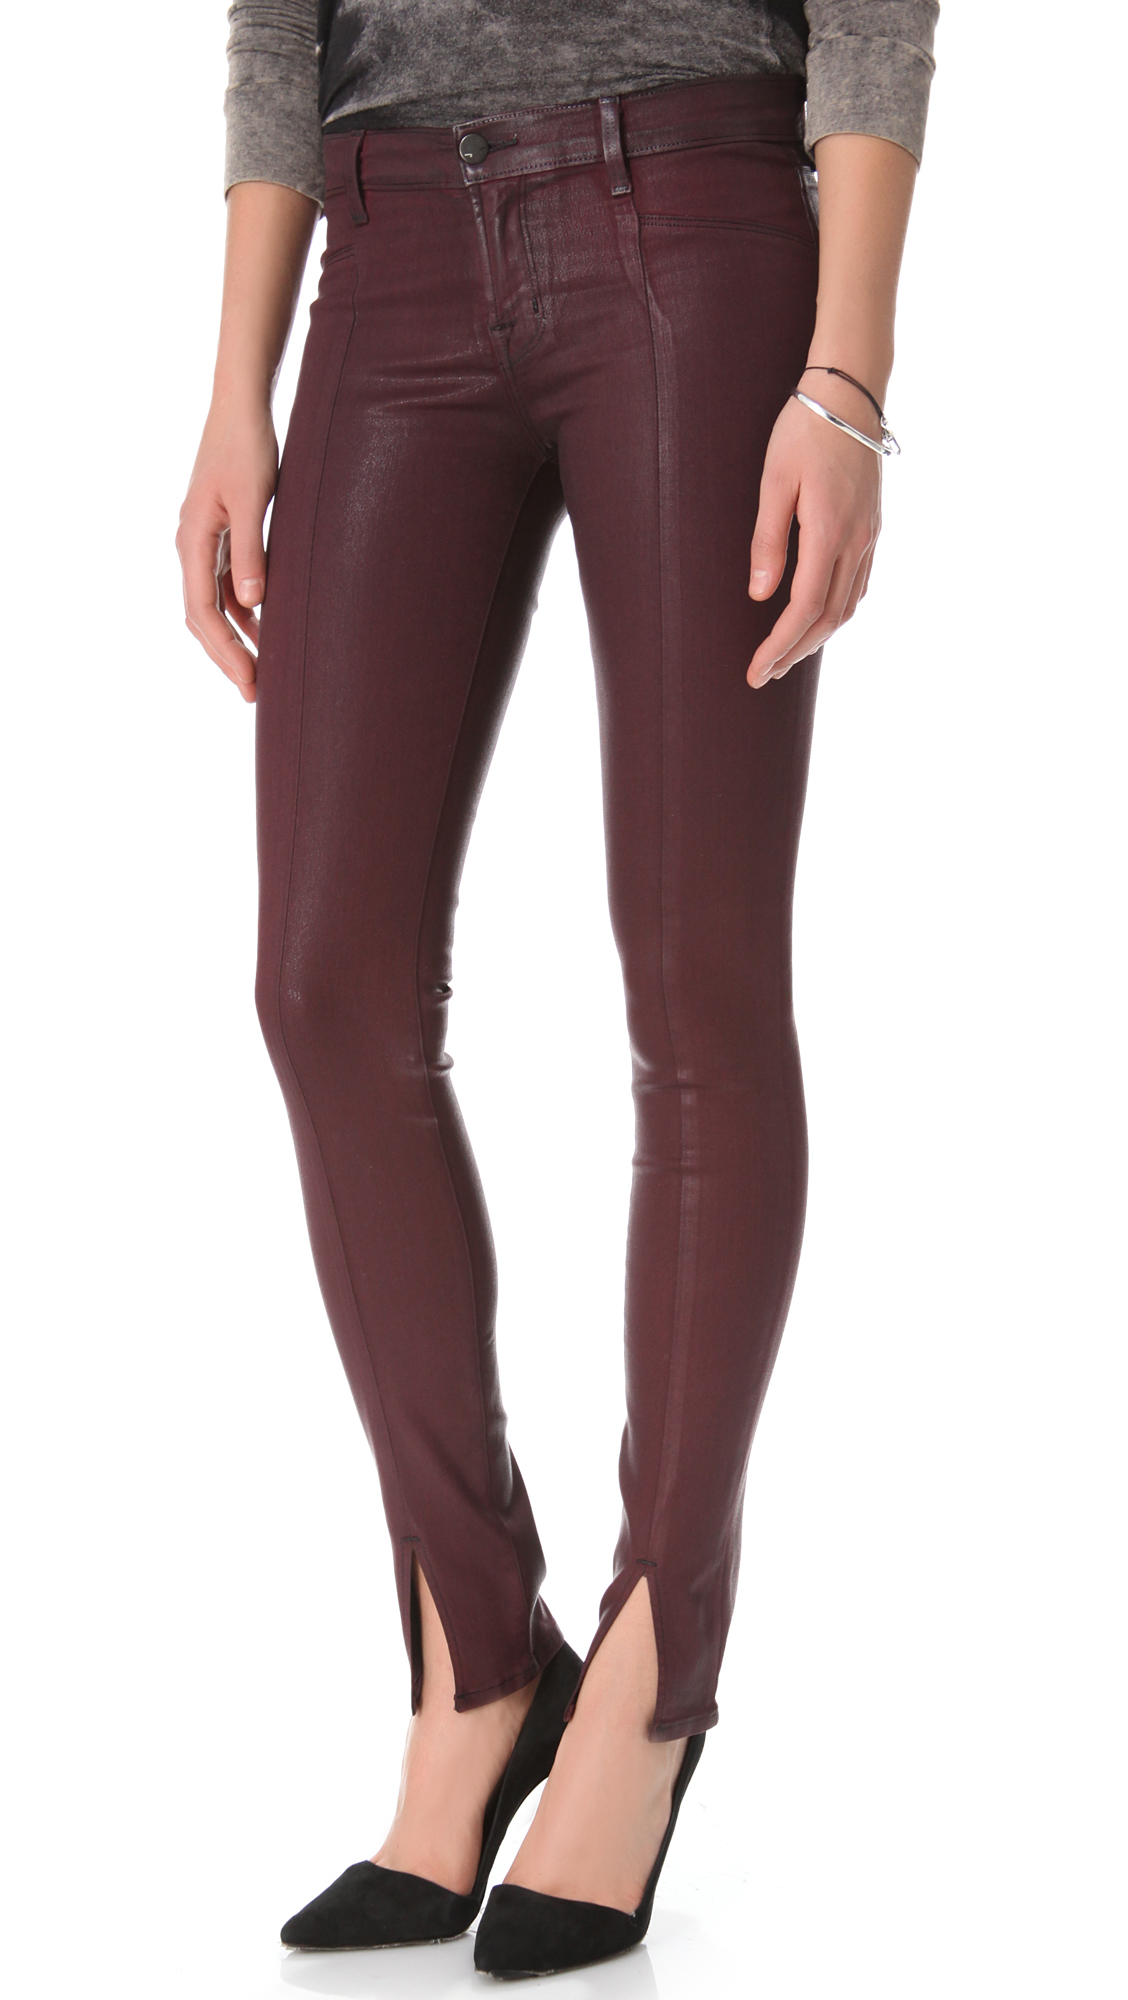 Lyst - J Brand Vera Coated Skinny Jeans in Brown